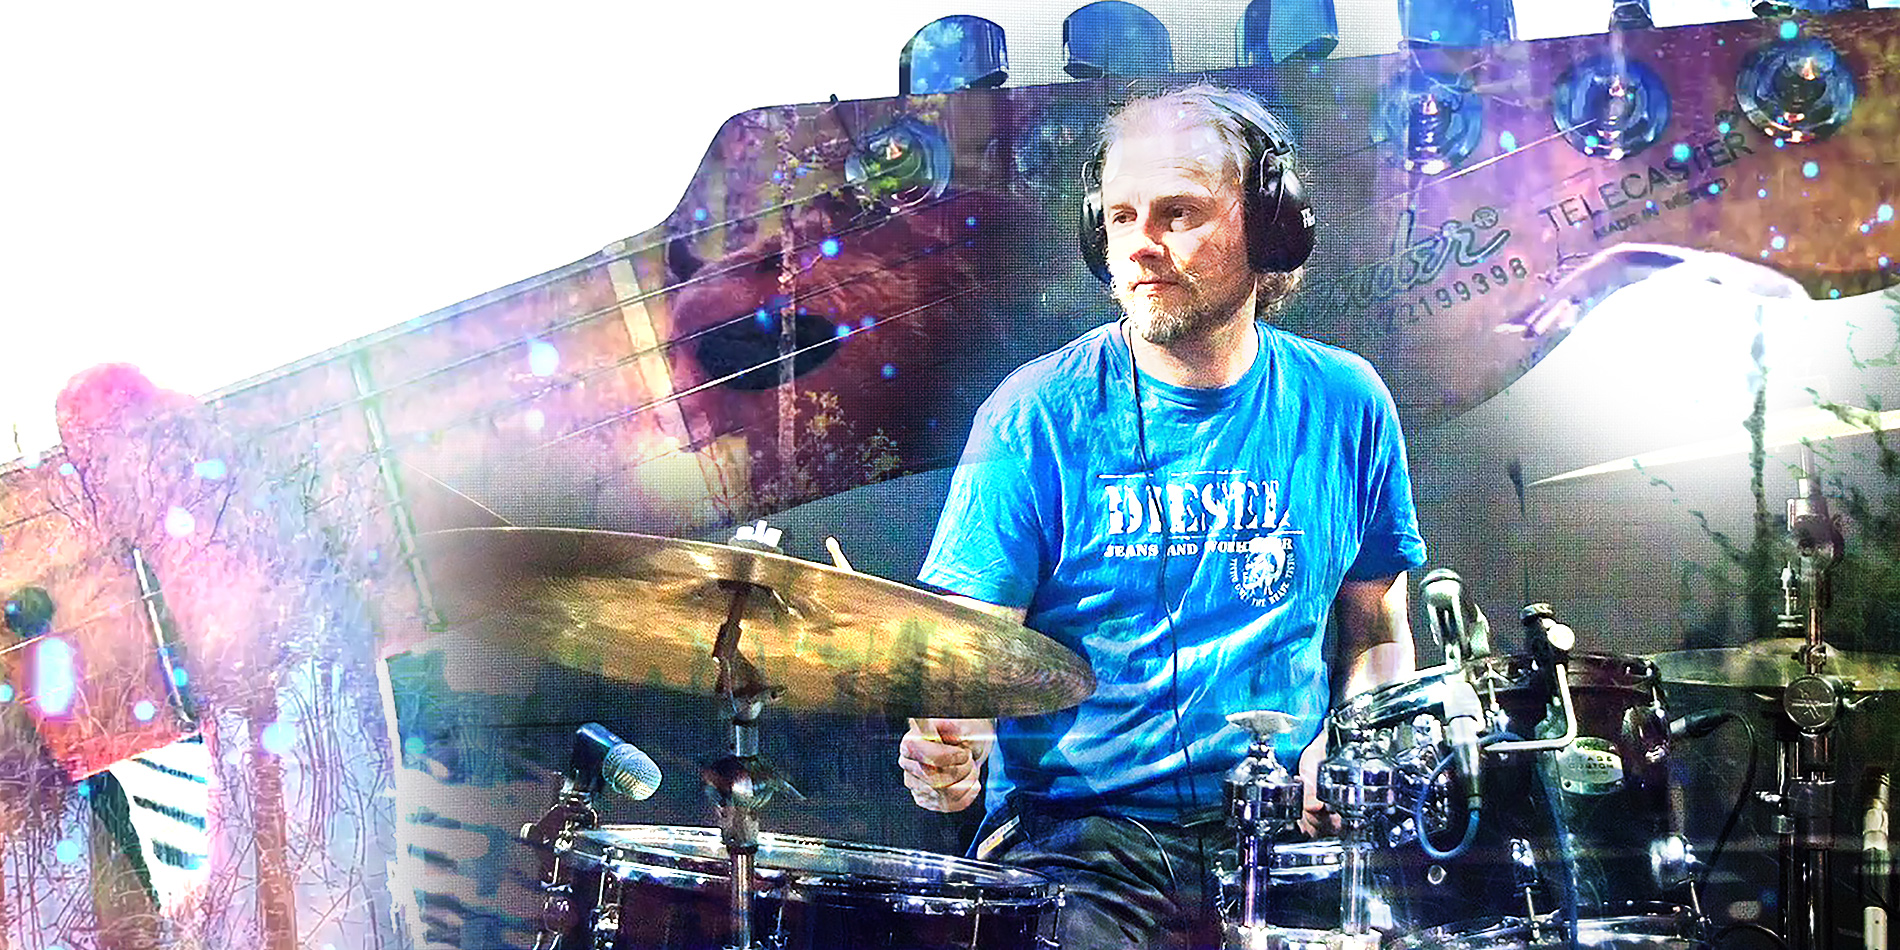 Morgan Ågren on drums